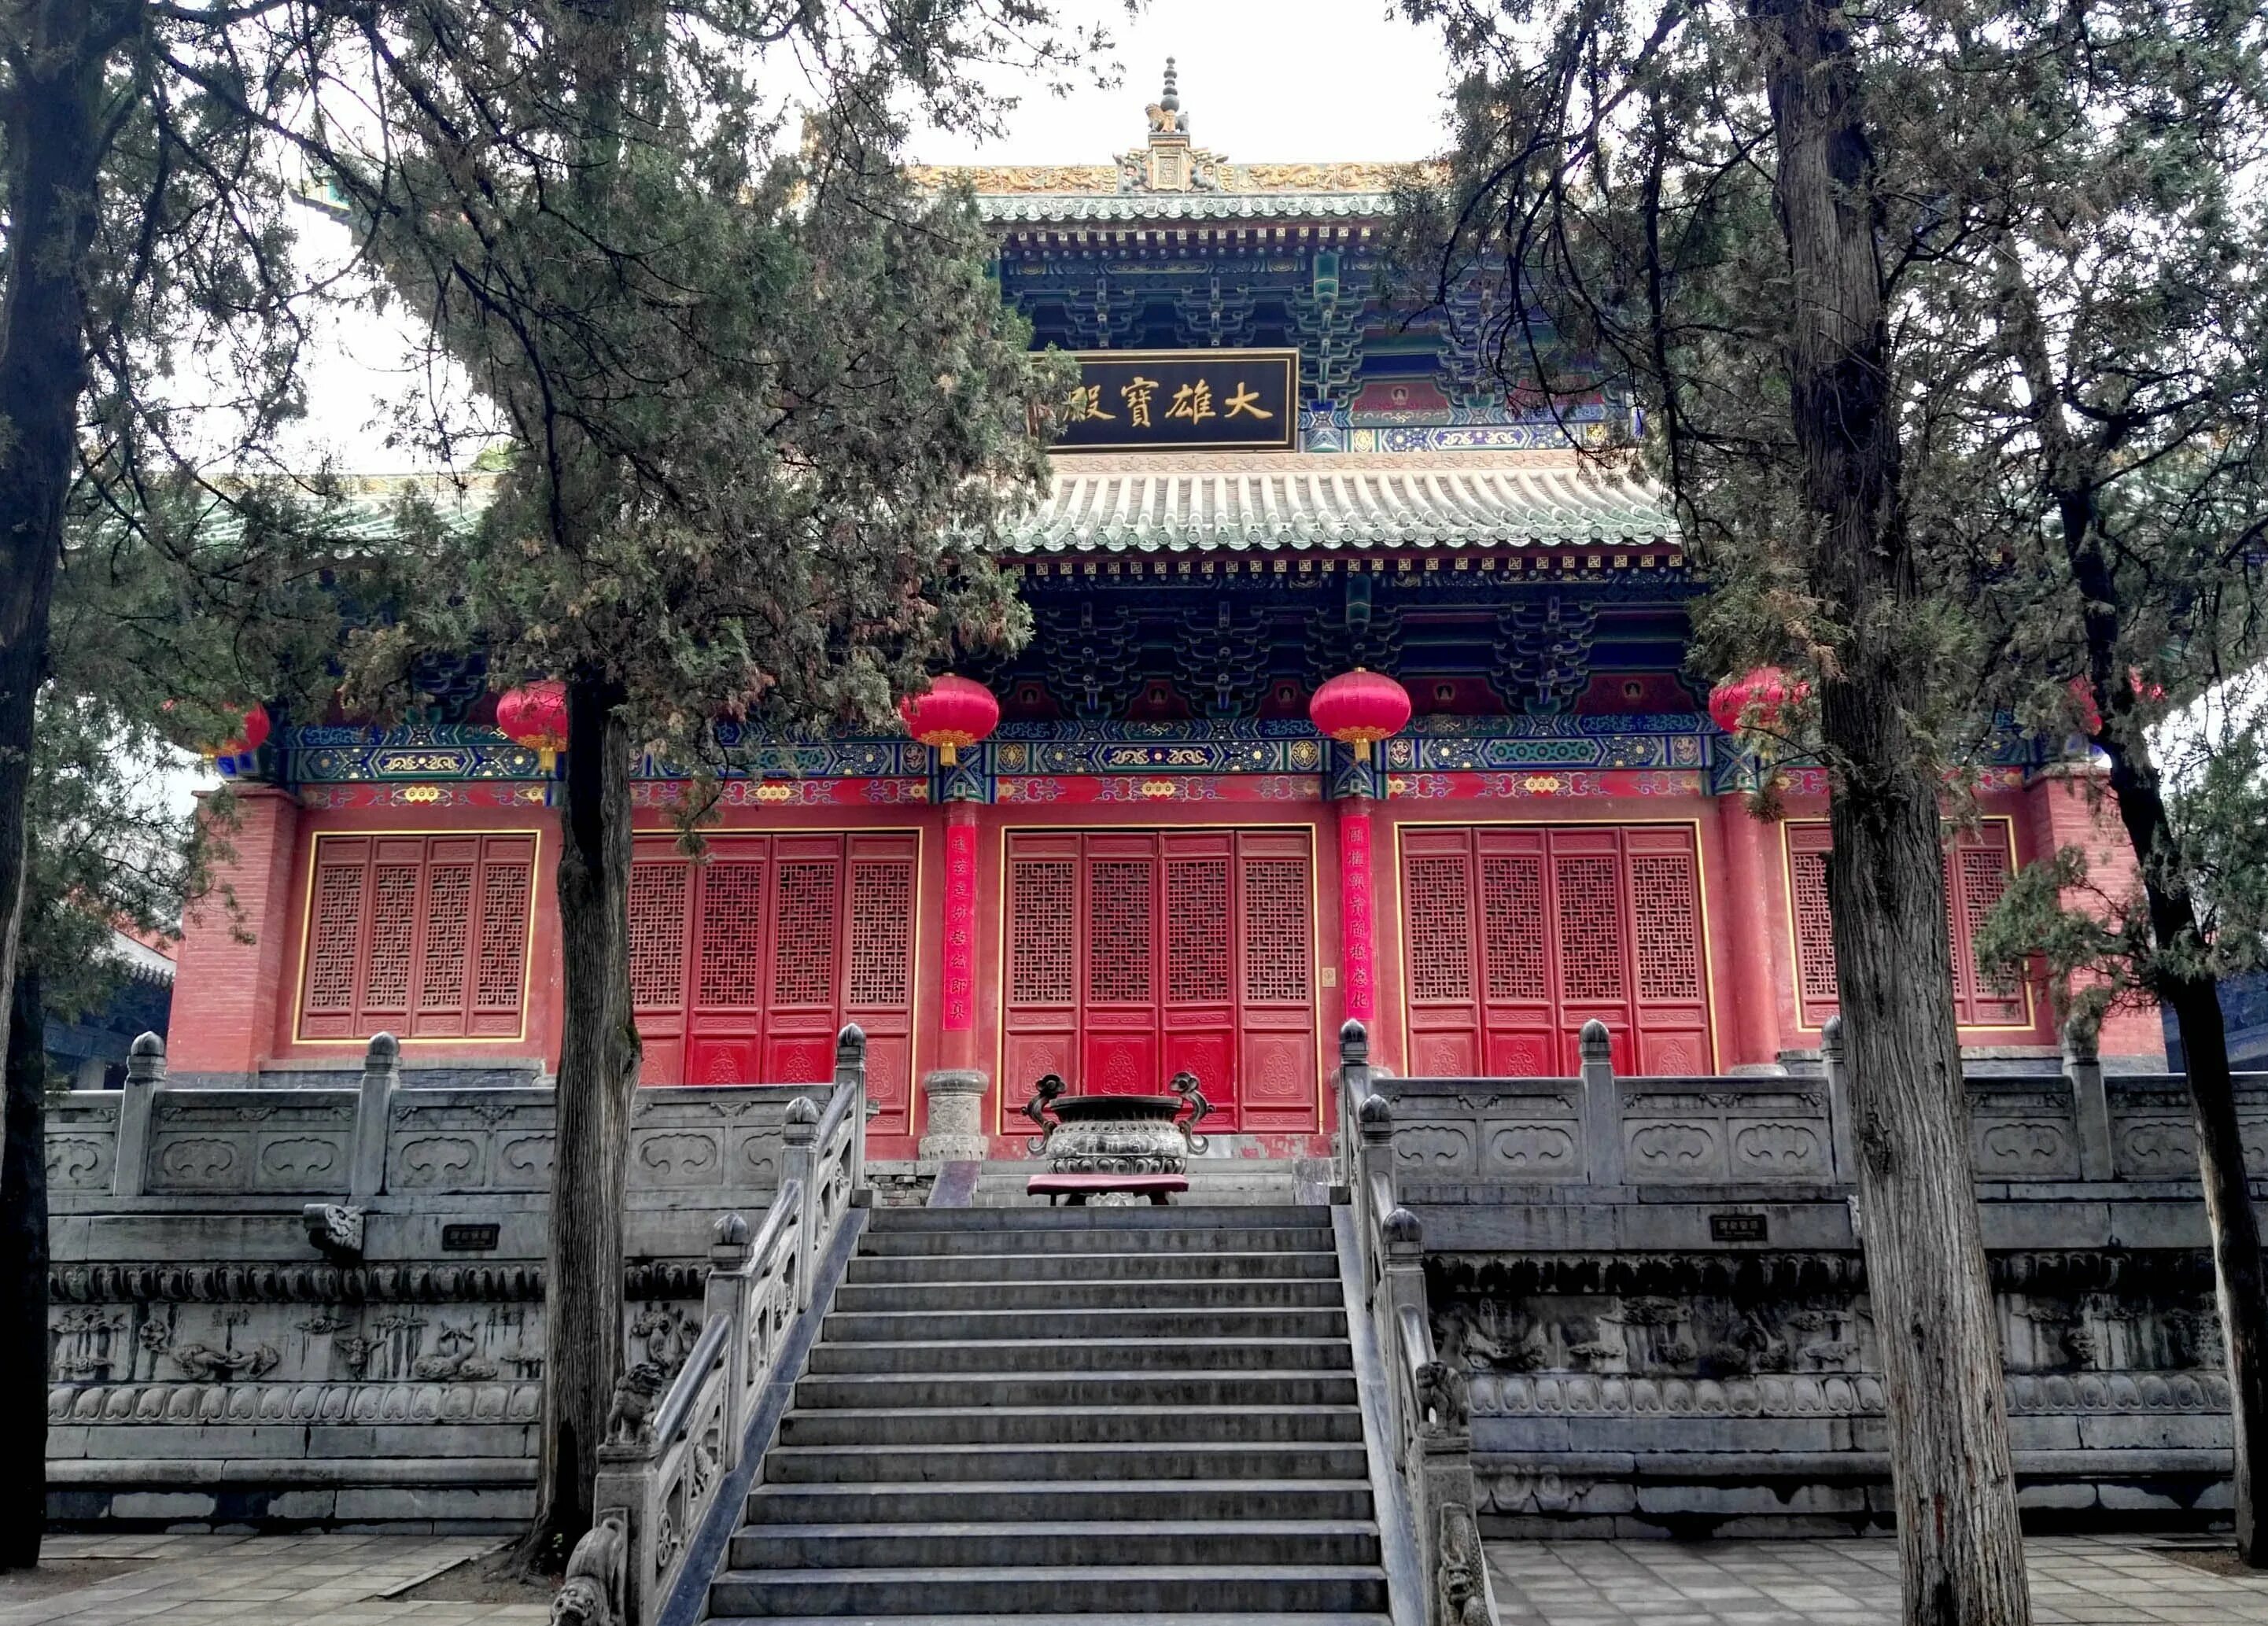 Shaolin temple. Буддийский монастырь Шаолинь. Монастырь Шаолинь Китай. Монастырь Северный Шаолинь. Монастырь Шаолинь Темпл.